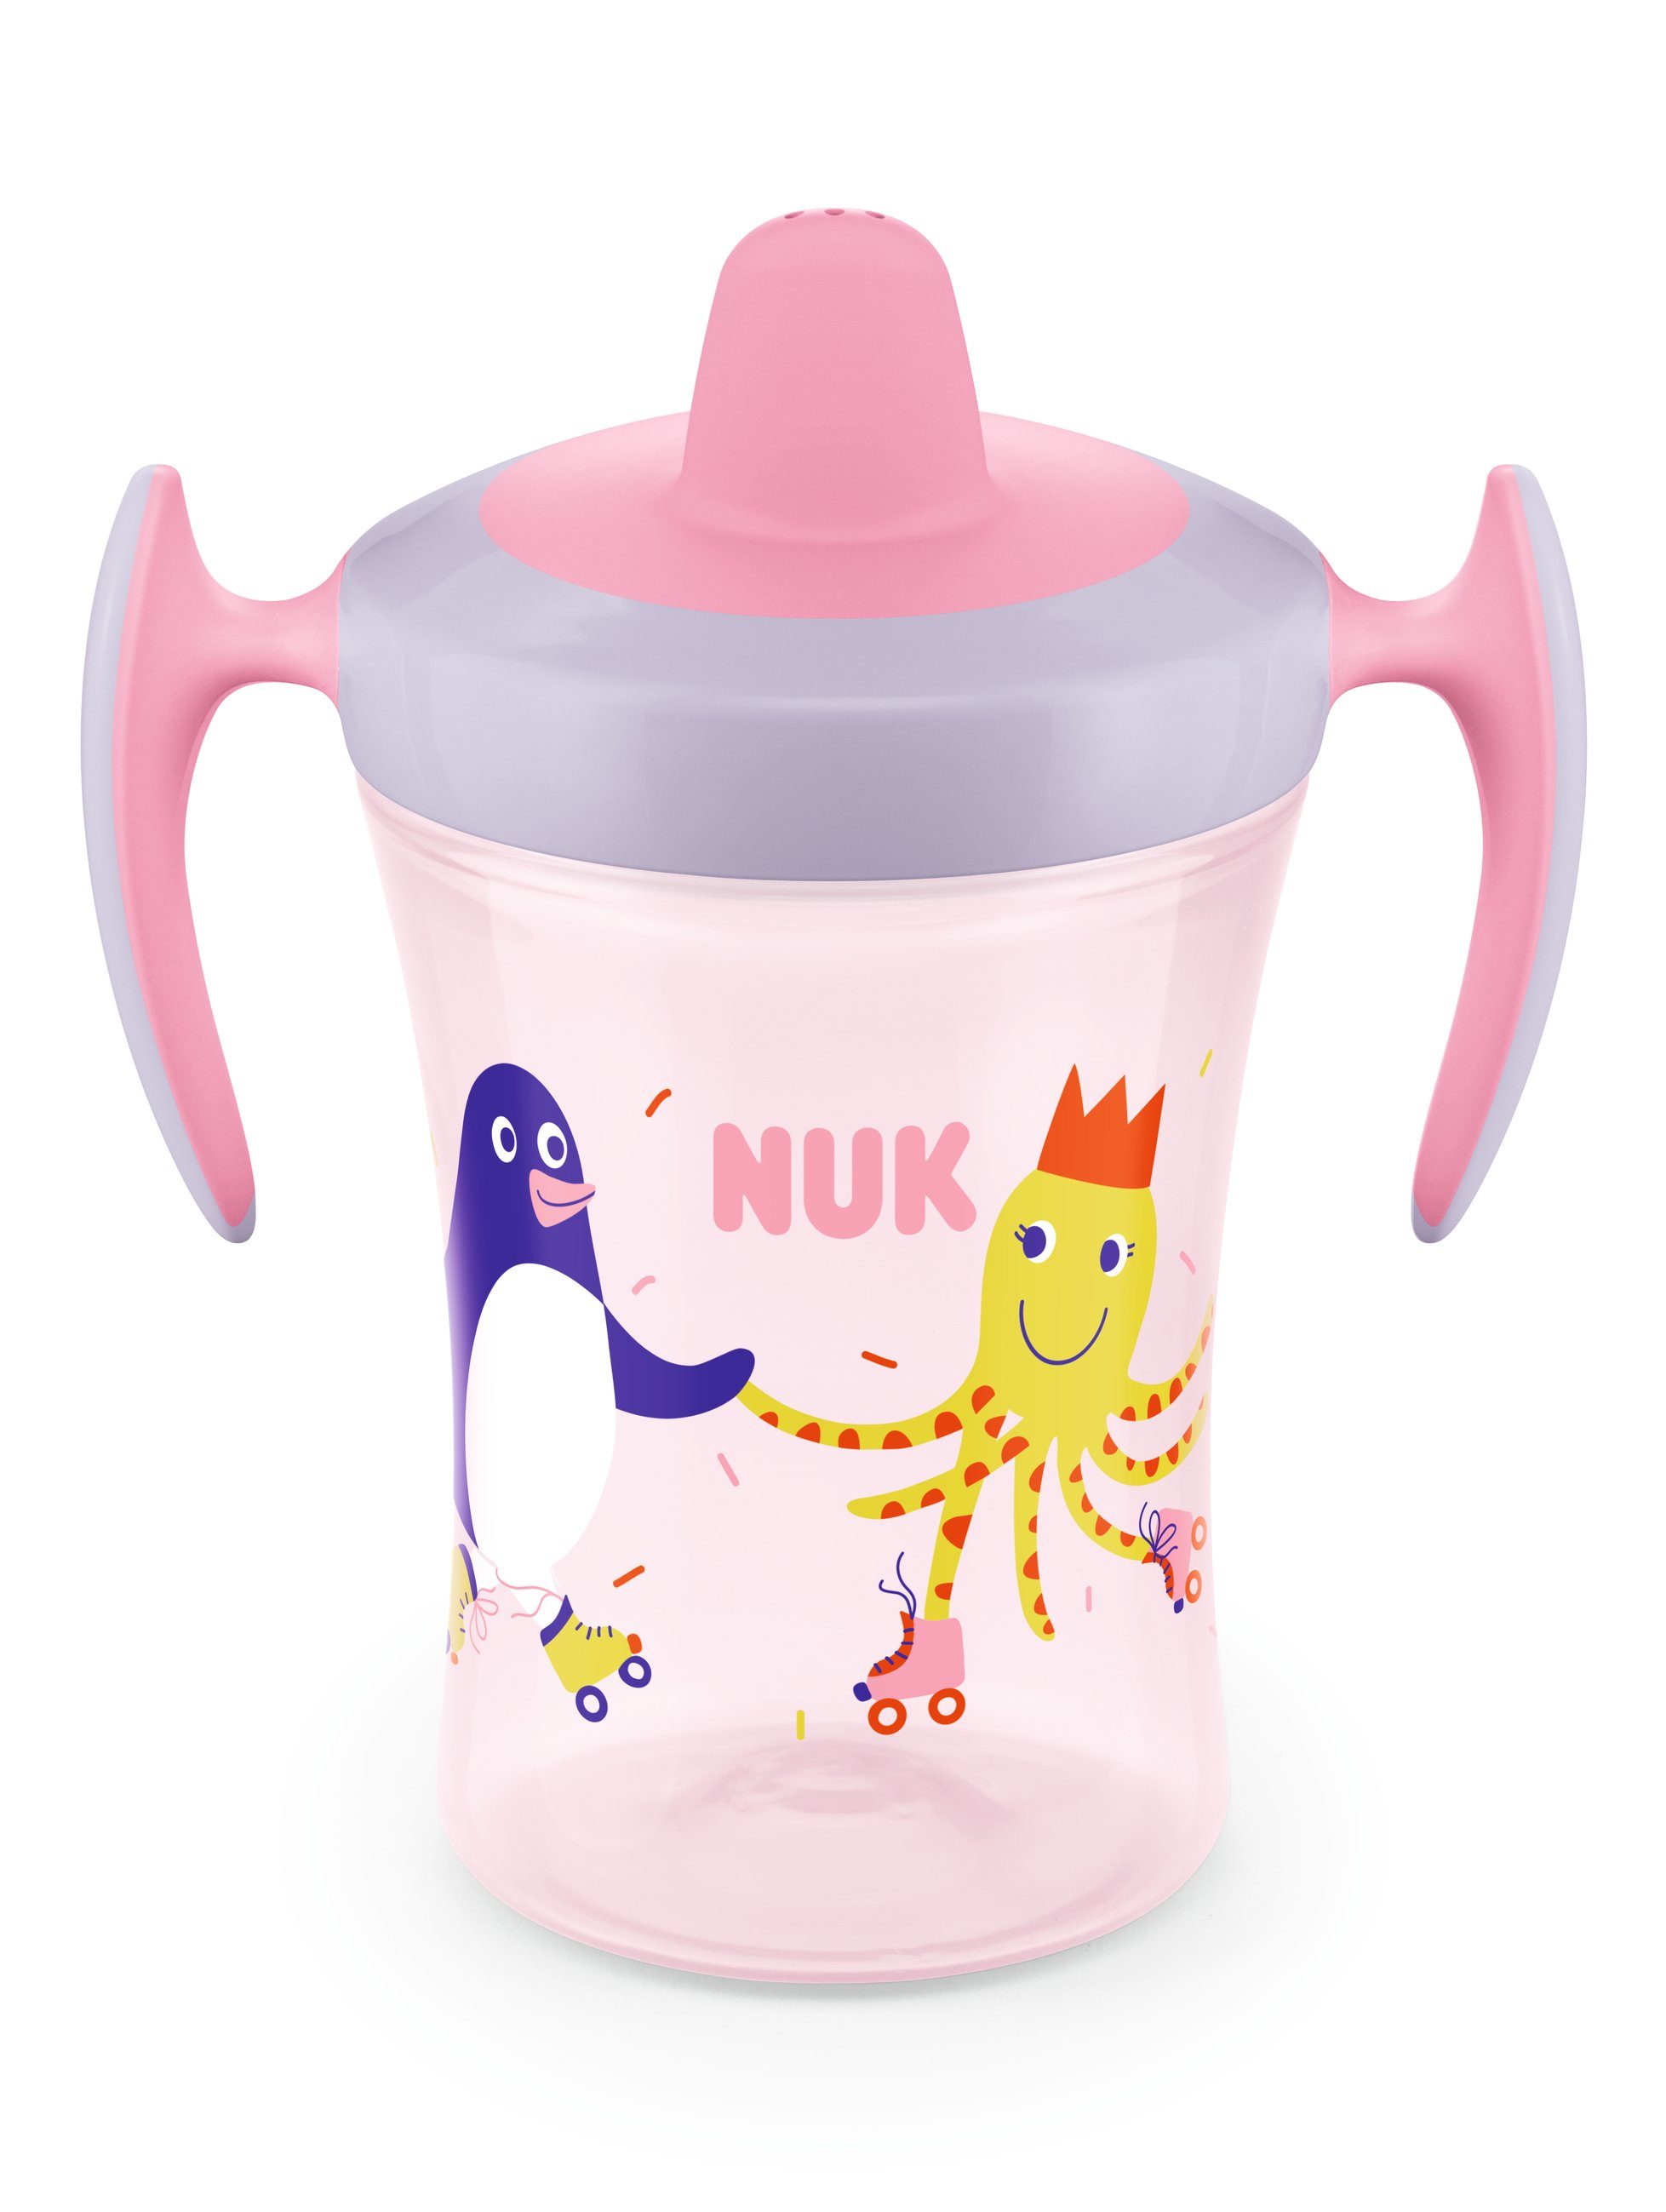 NUK Babyflasche NUK Trainer Cup 230ml 10255609, auslaufsicher, ab 6 Monaten, BPA